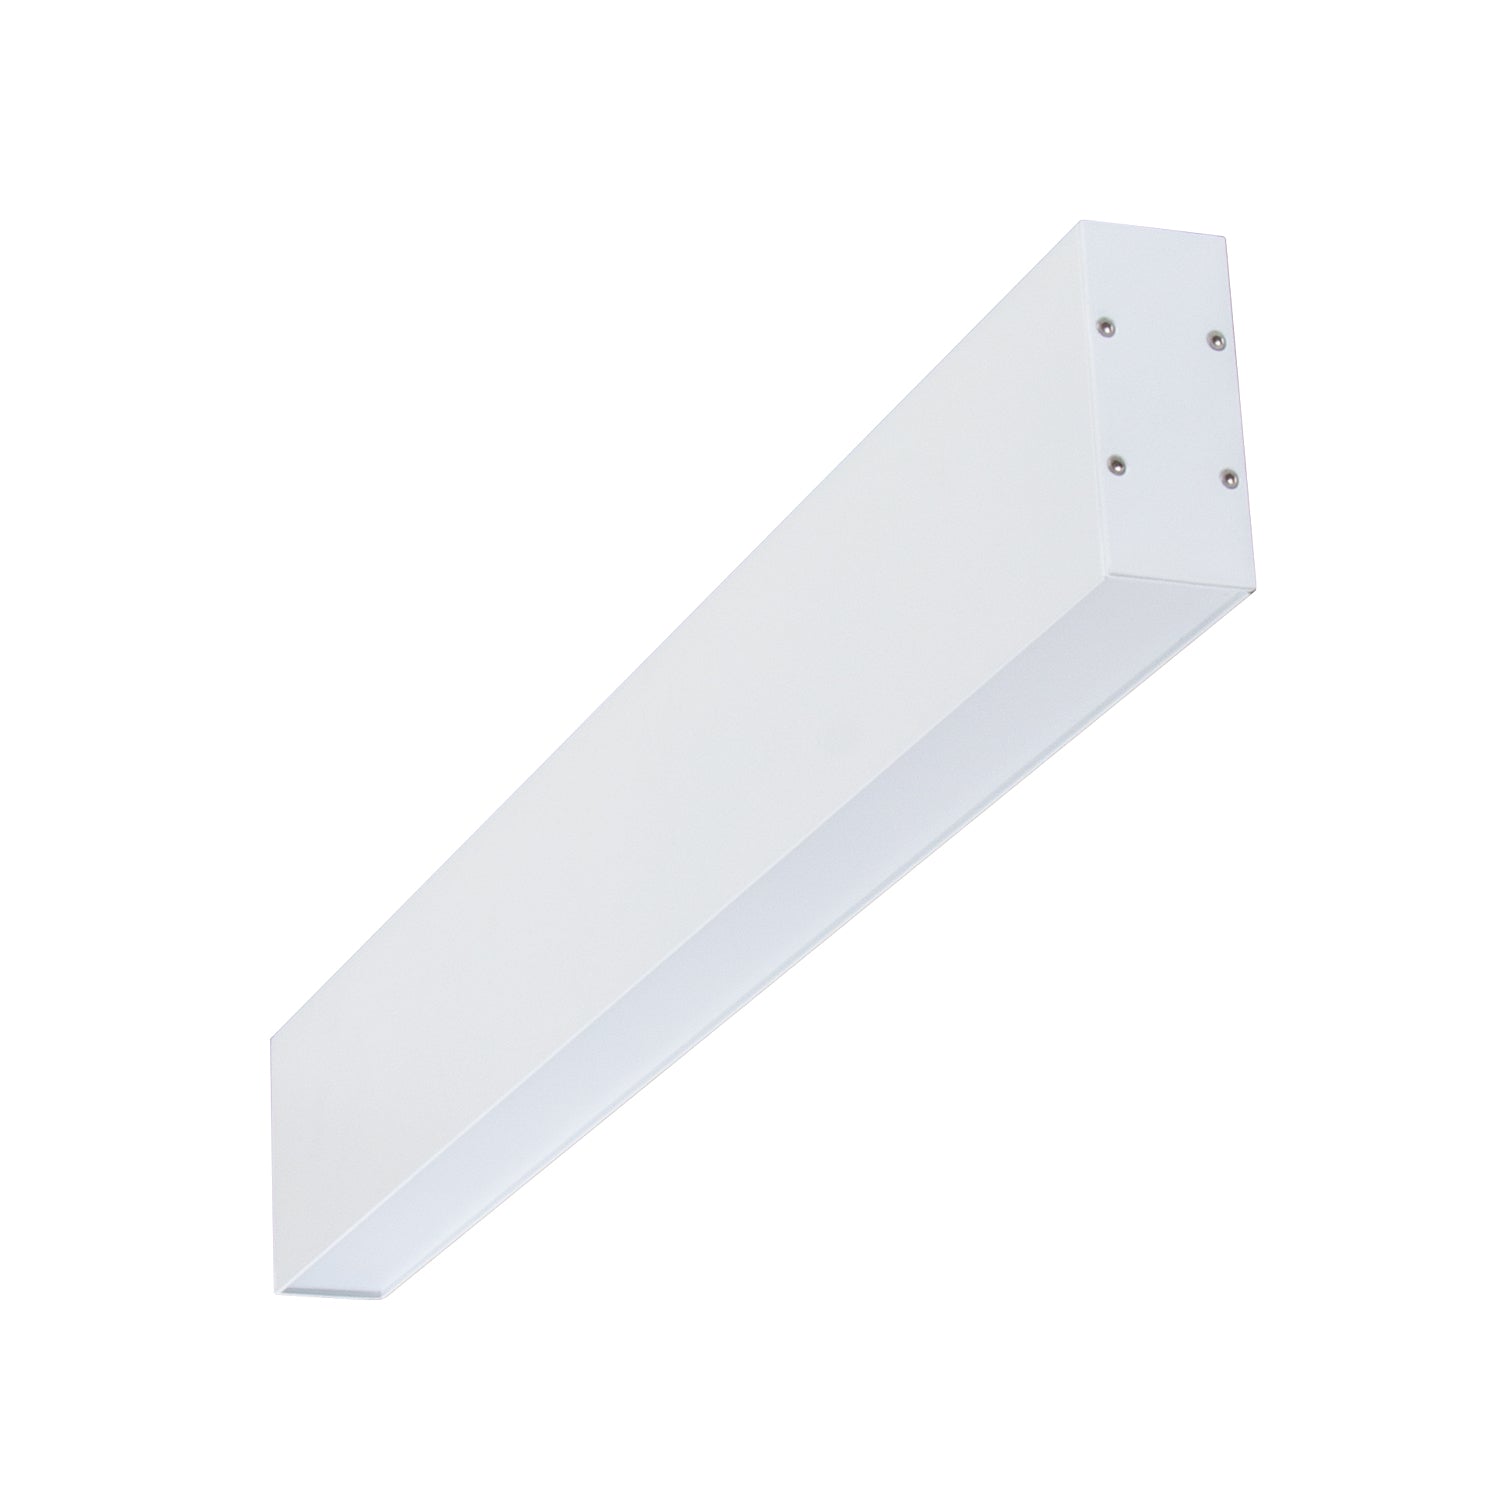 Domus Lighting Indoor Wall Lights White / 3000K LUMALINE-2-300 LED WALL LIGHT Lights-For-You 23587